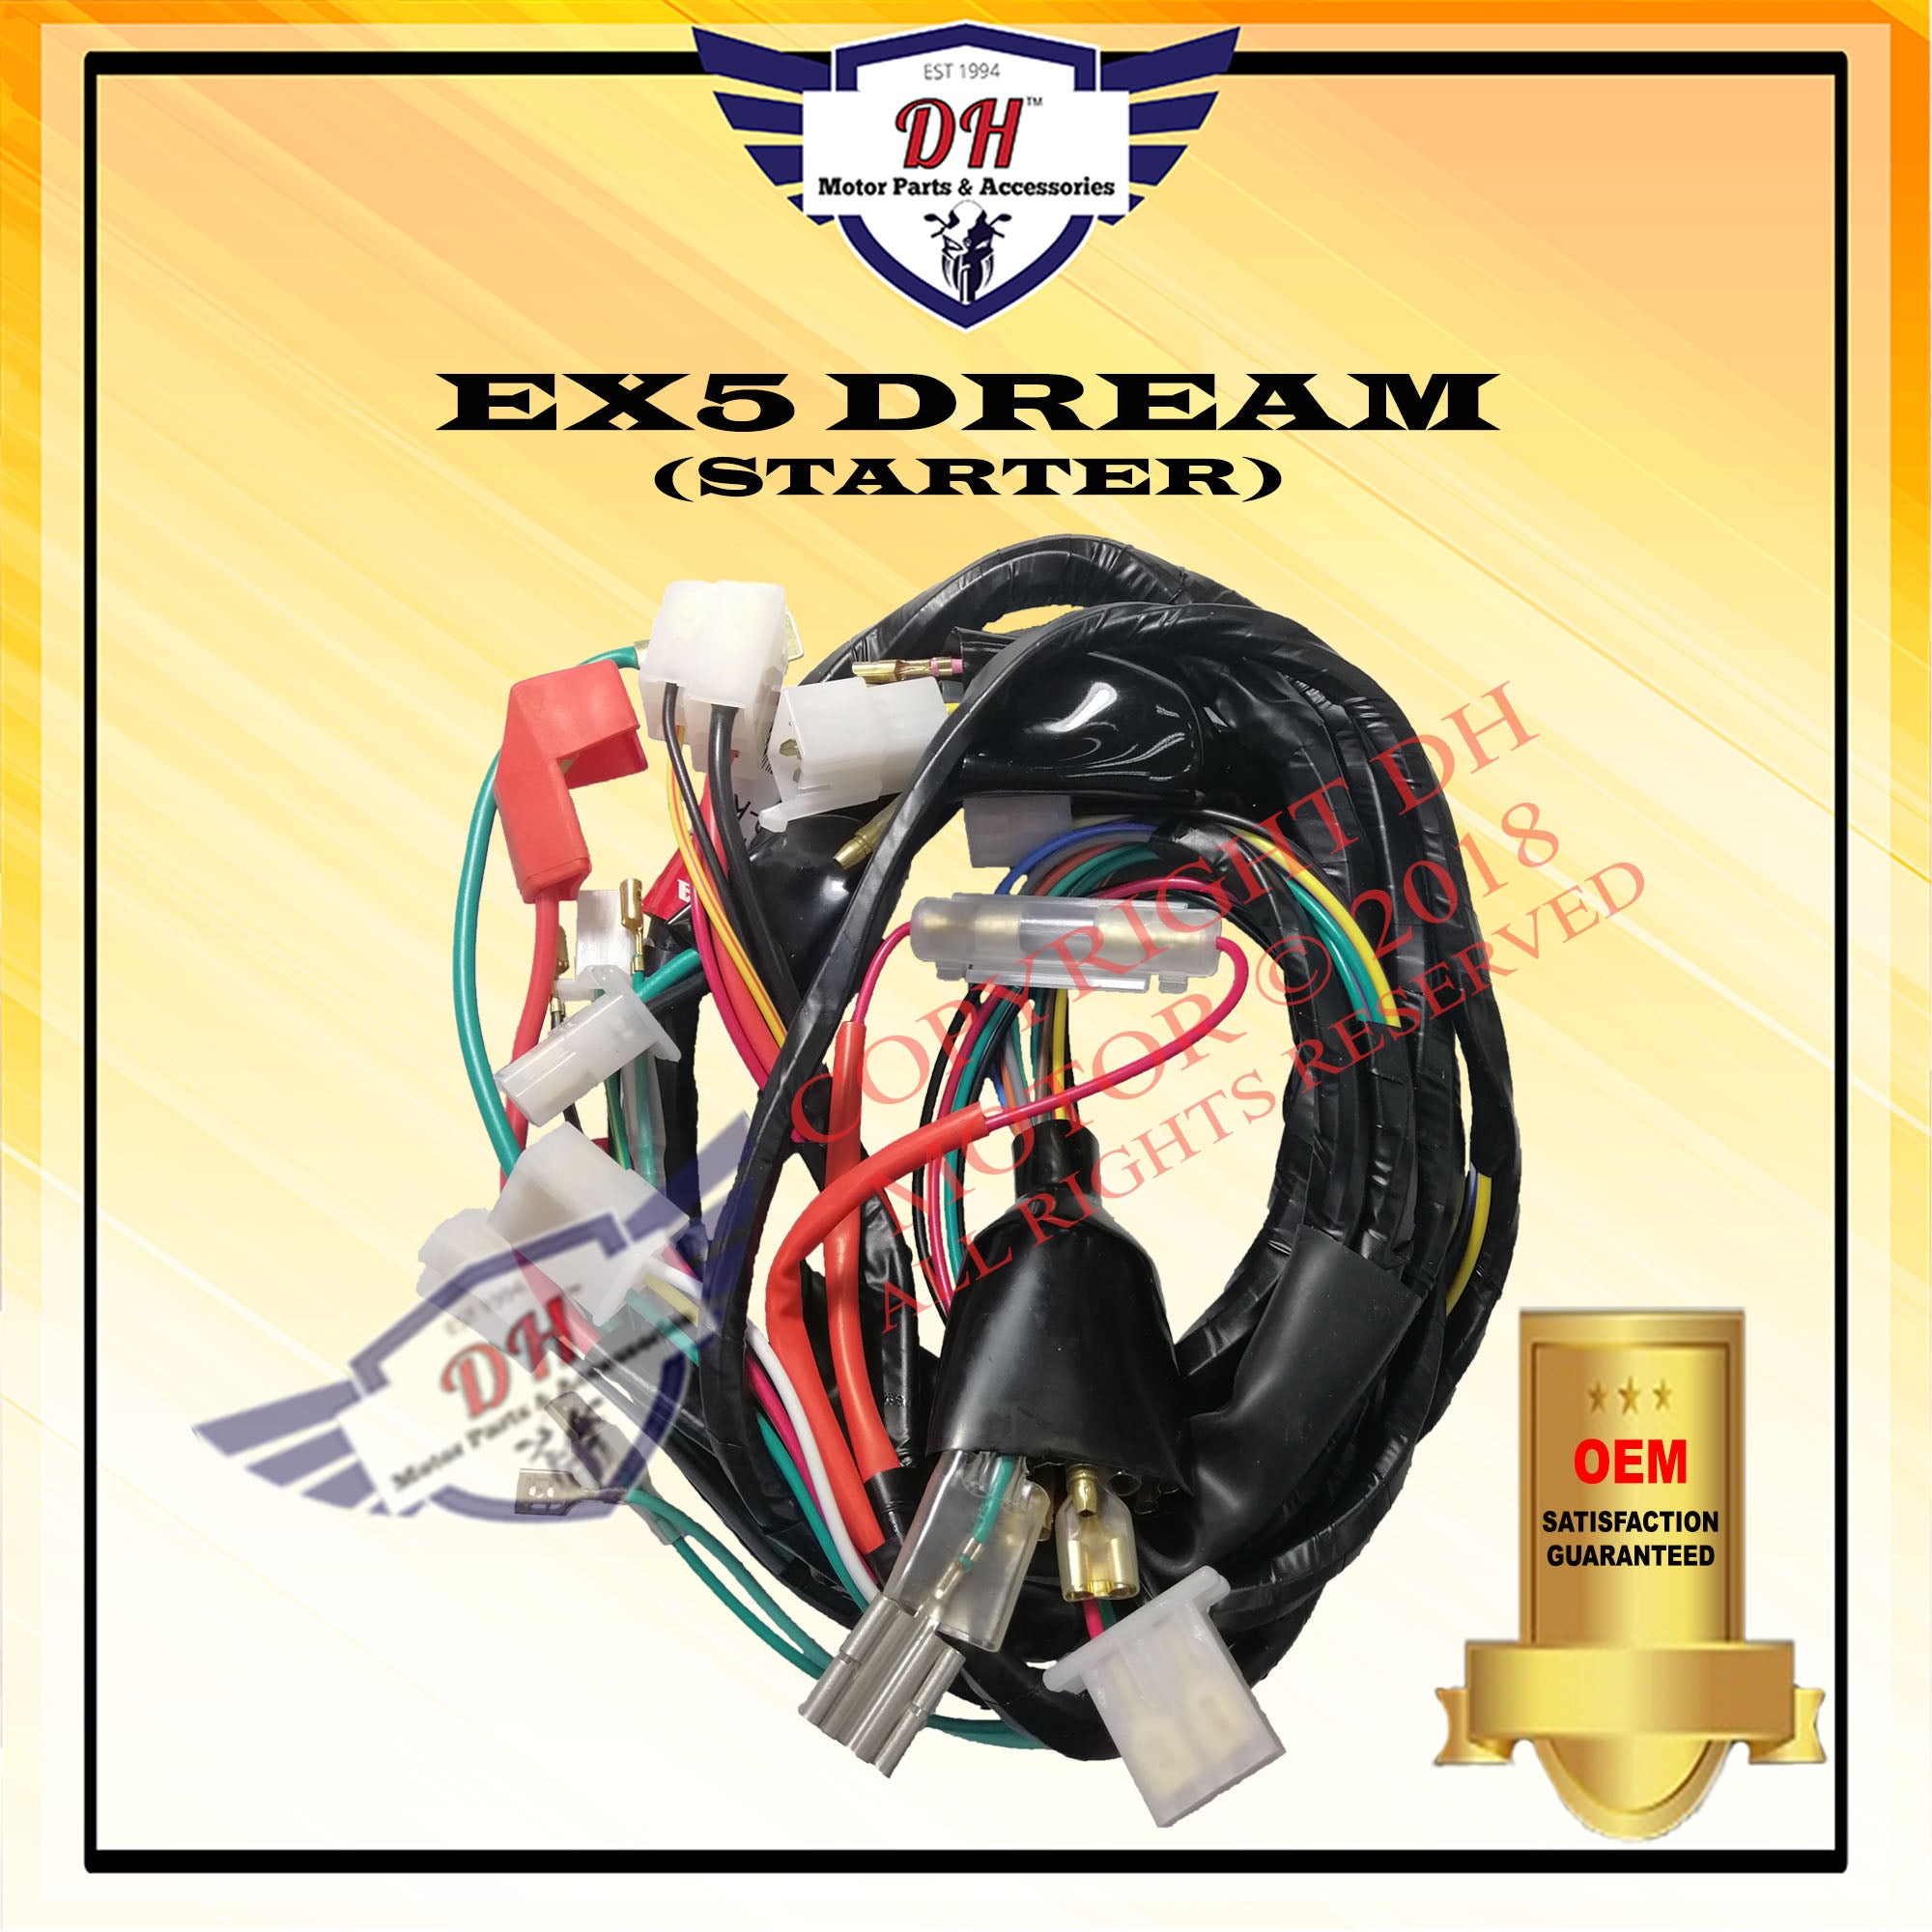 EX5 DREAM (OEM) WIRING BODY WIRE HARNESS FULL SET HONDA – DH MOTOR